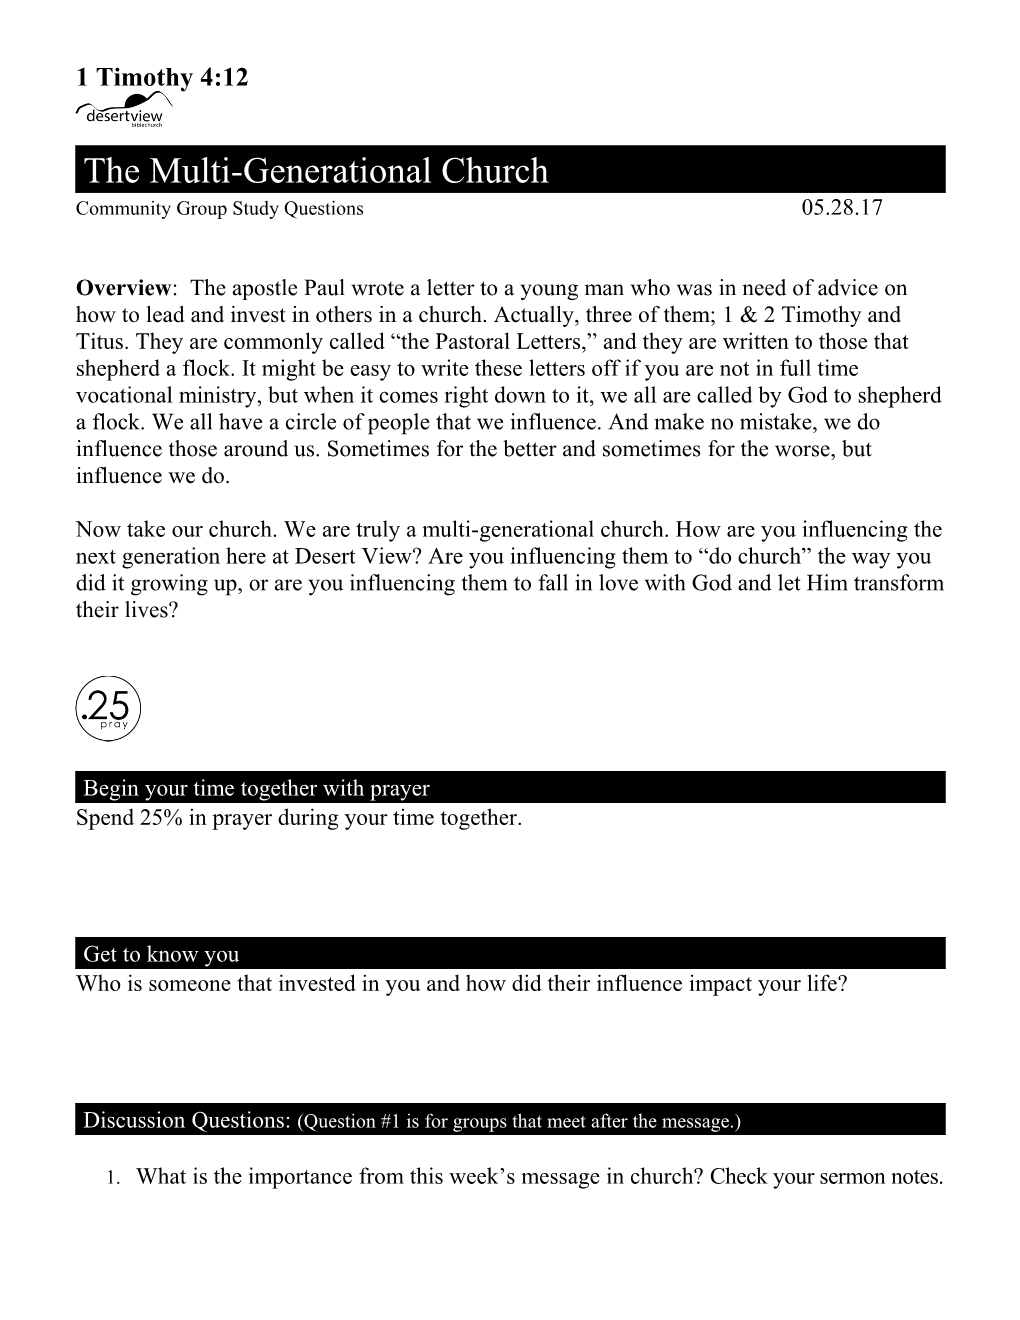 The Multi-Generational Church